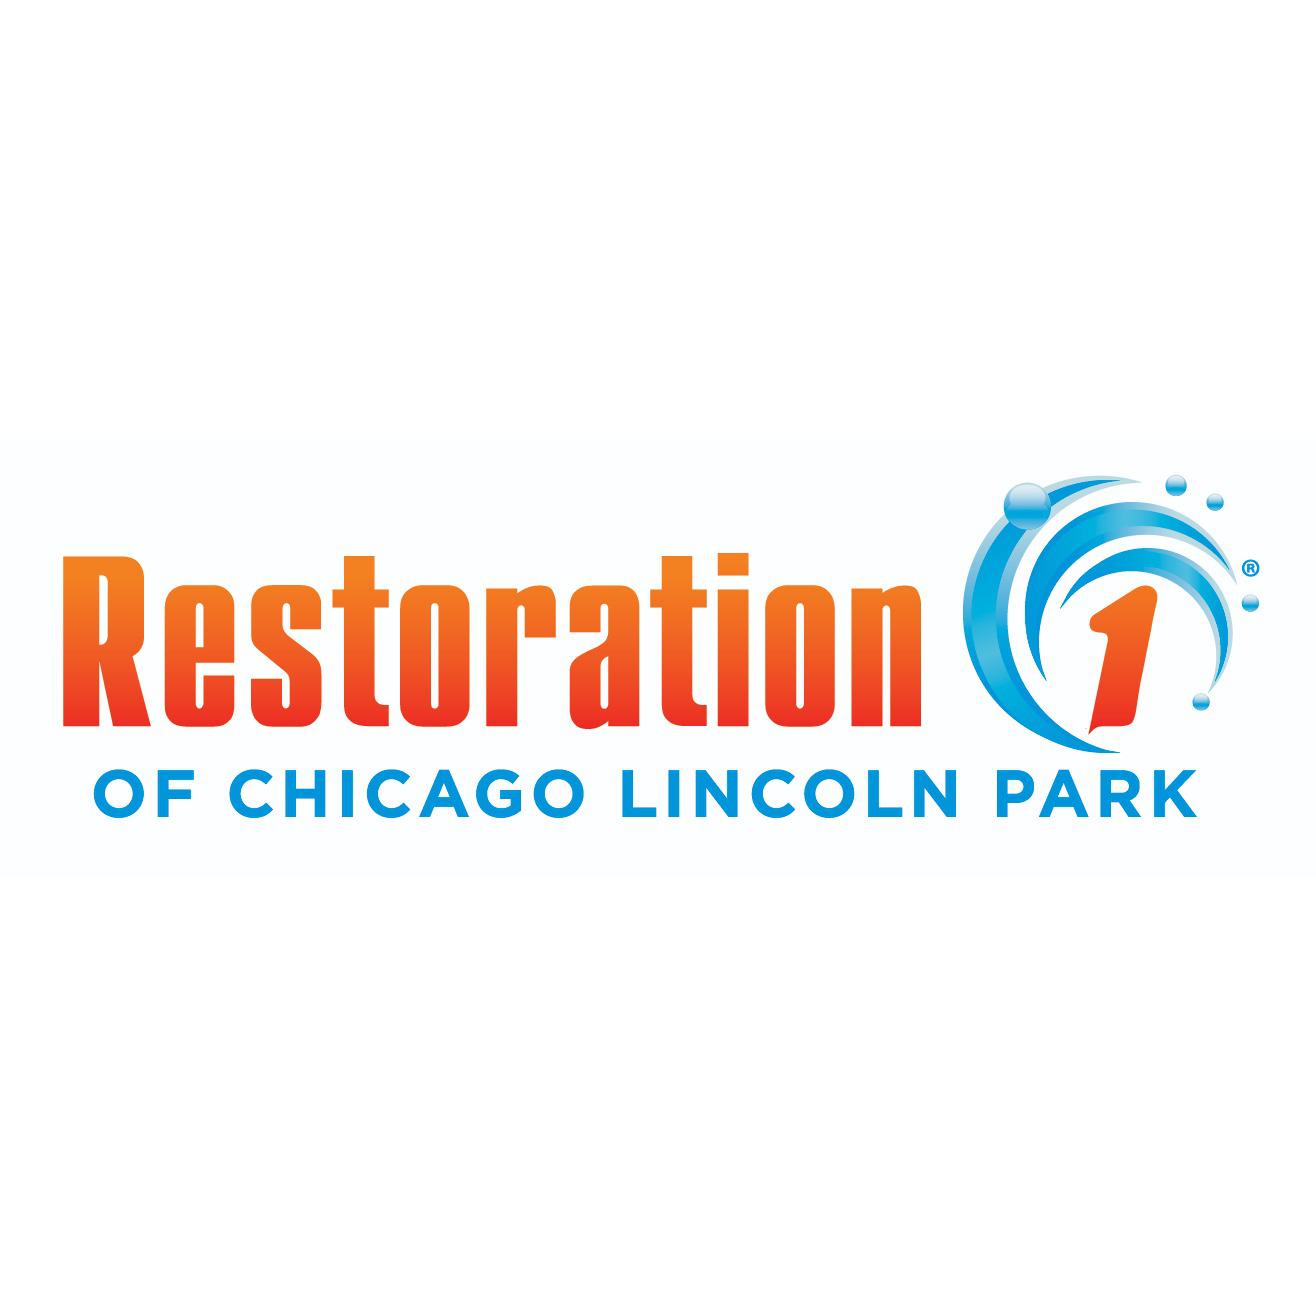 Restoration 1 of Chicago Lincoln Park